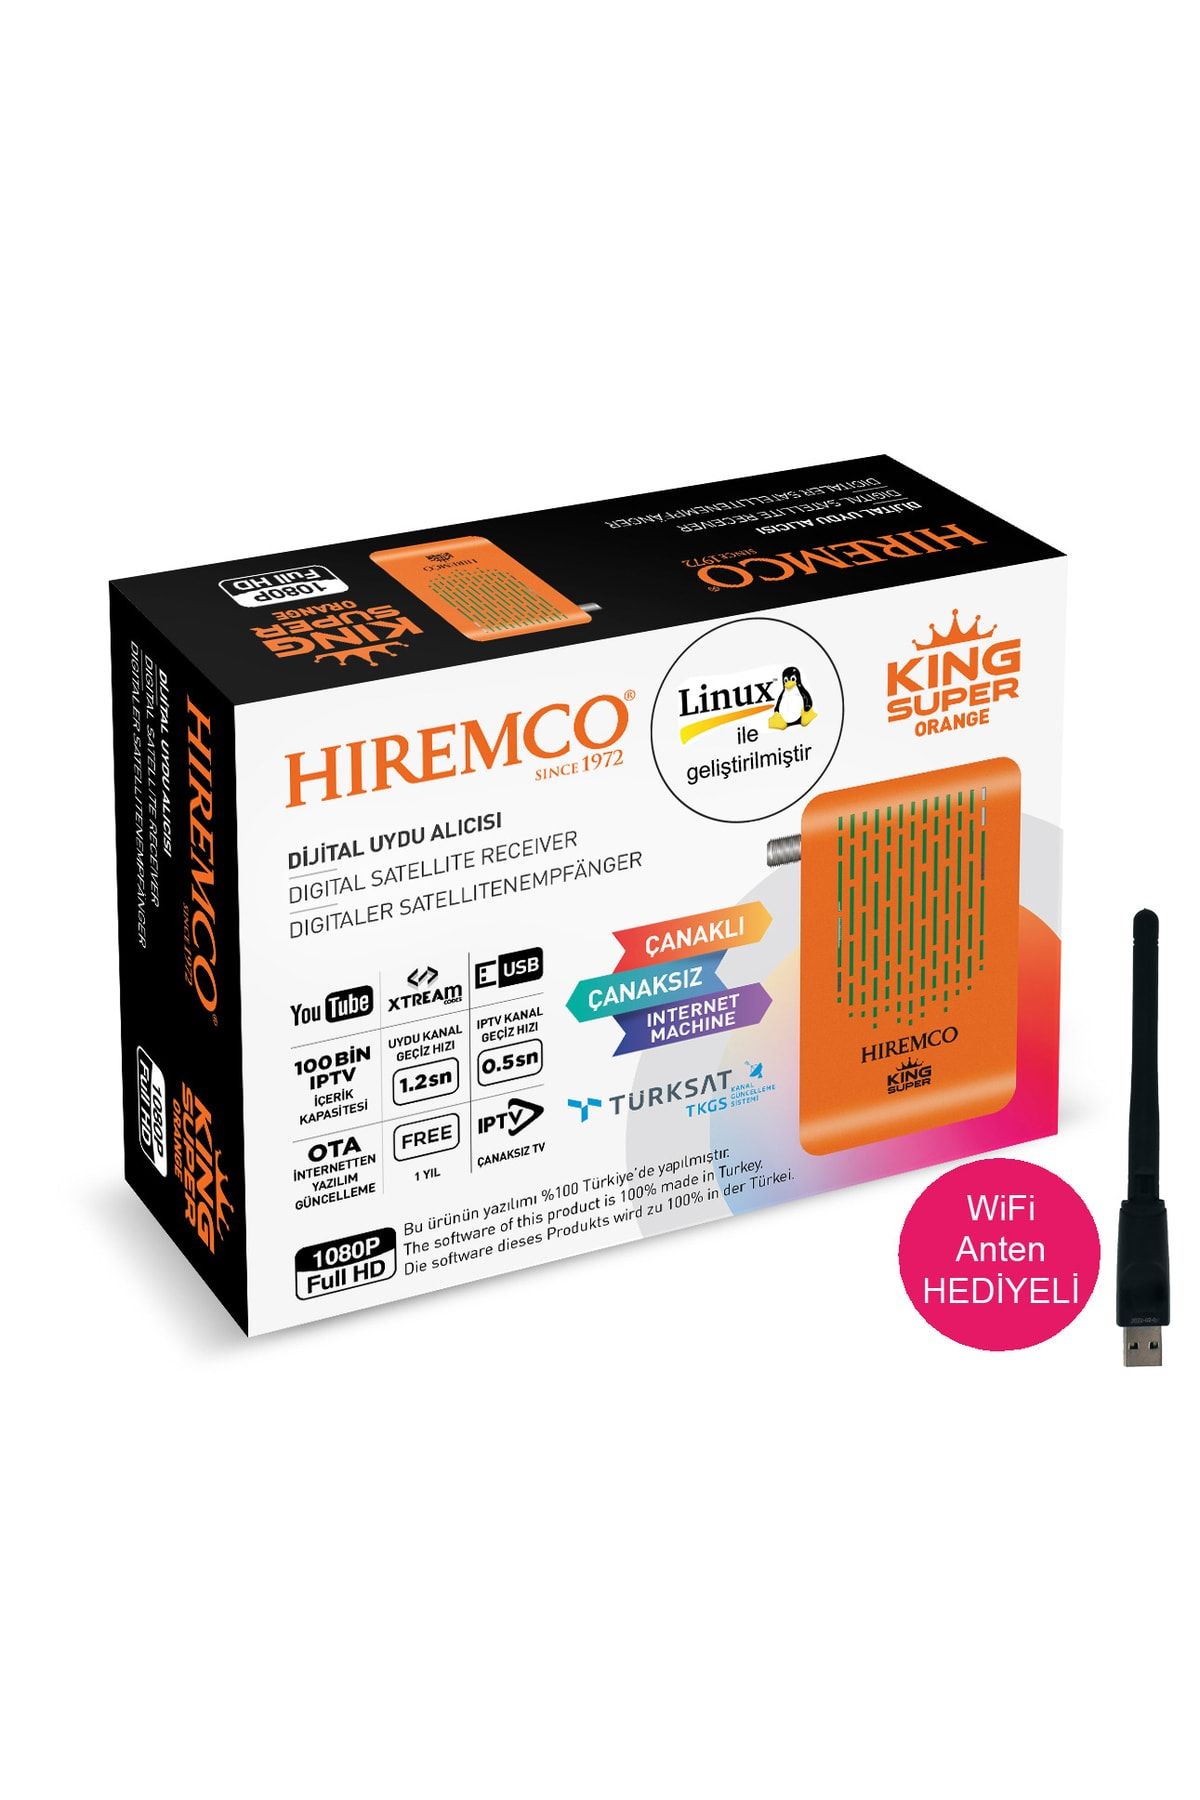 Hiremco Süper King Hd Orange Uydu Alıcısı ( Linux / Dolby Digital ) + Wifi Antenli